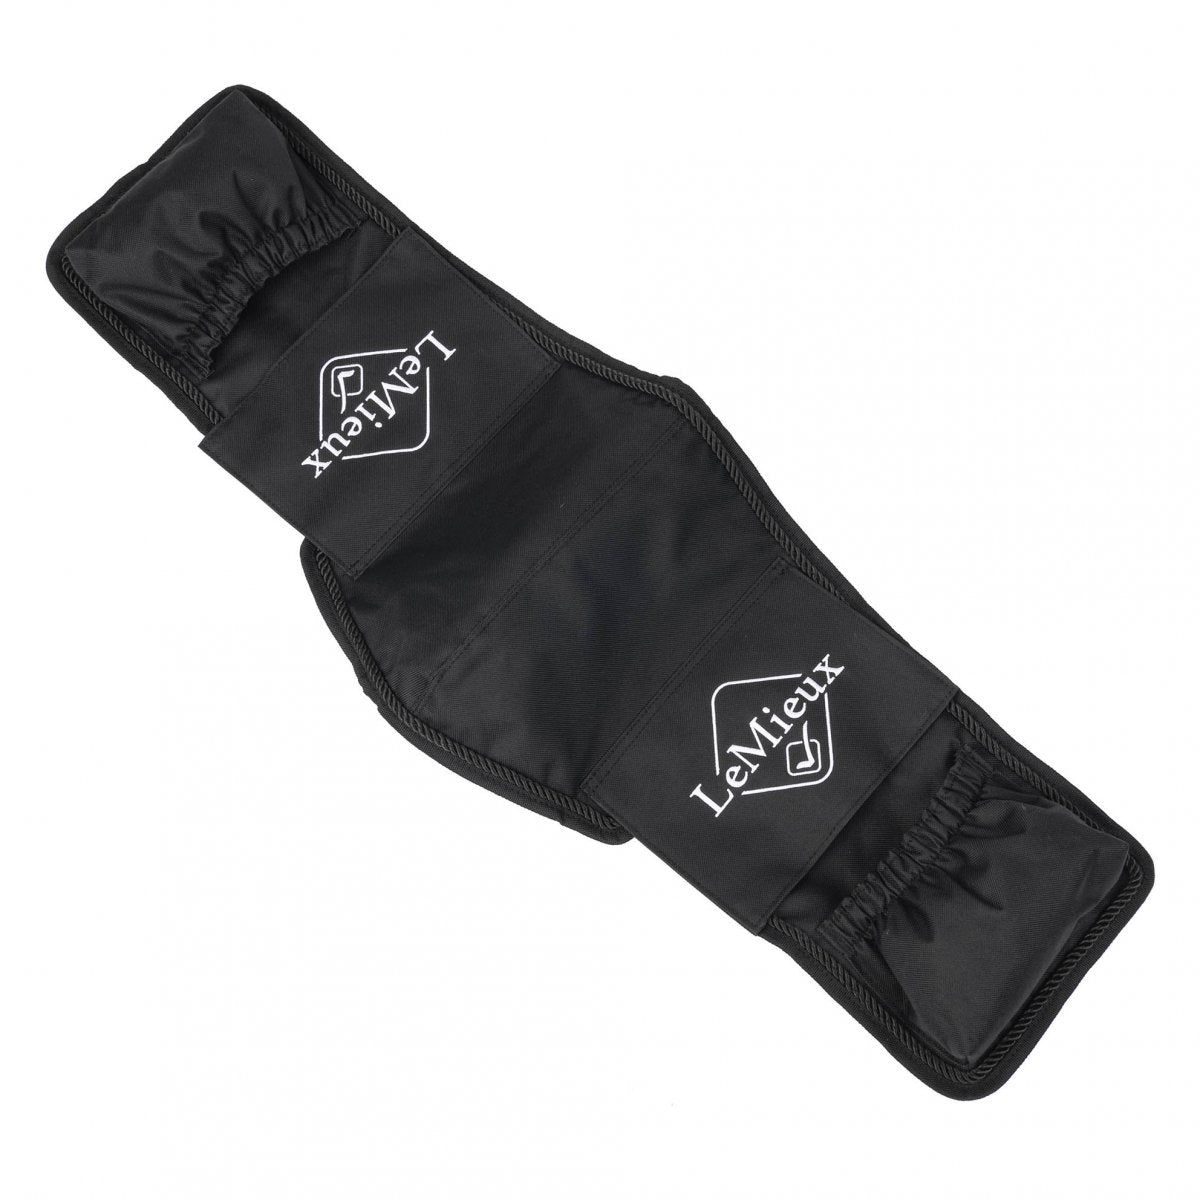 Black stirrup leathers cover with LeMieux branding, elastic edges.